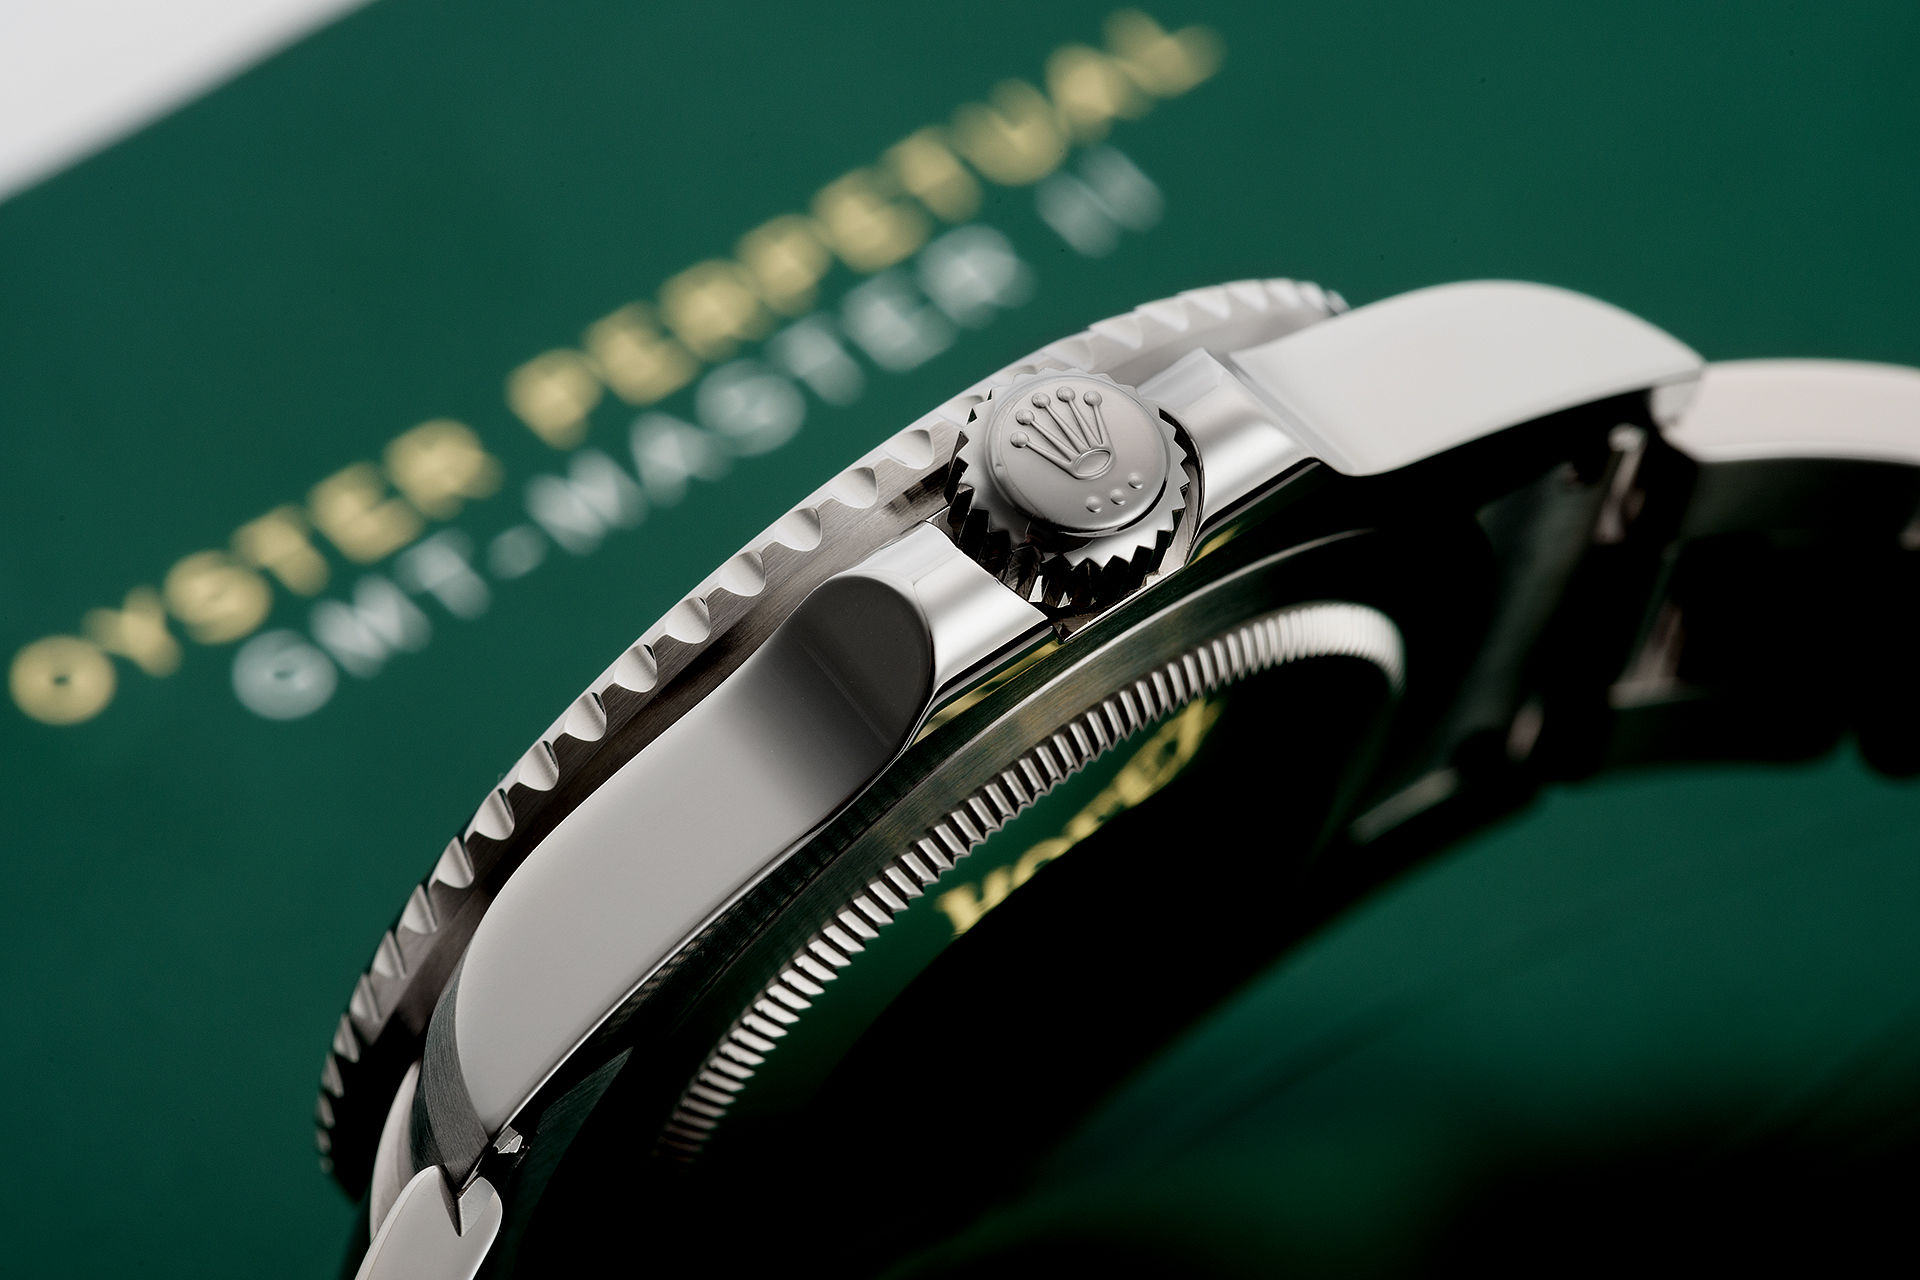 ref 116710LN | Cerachrom 'Full Set' | Rolex GMT-Master II